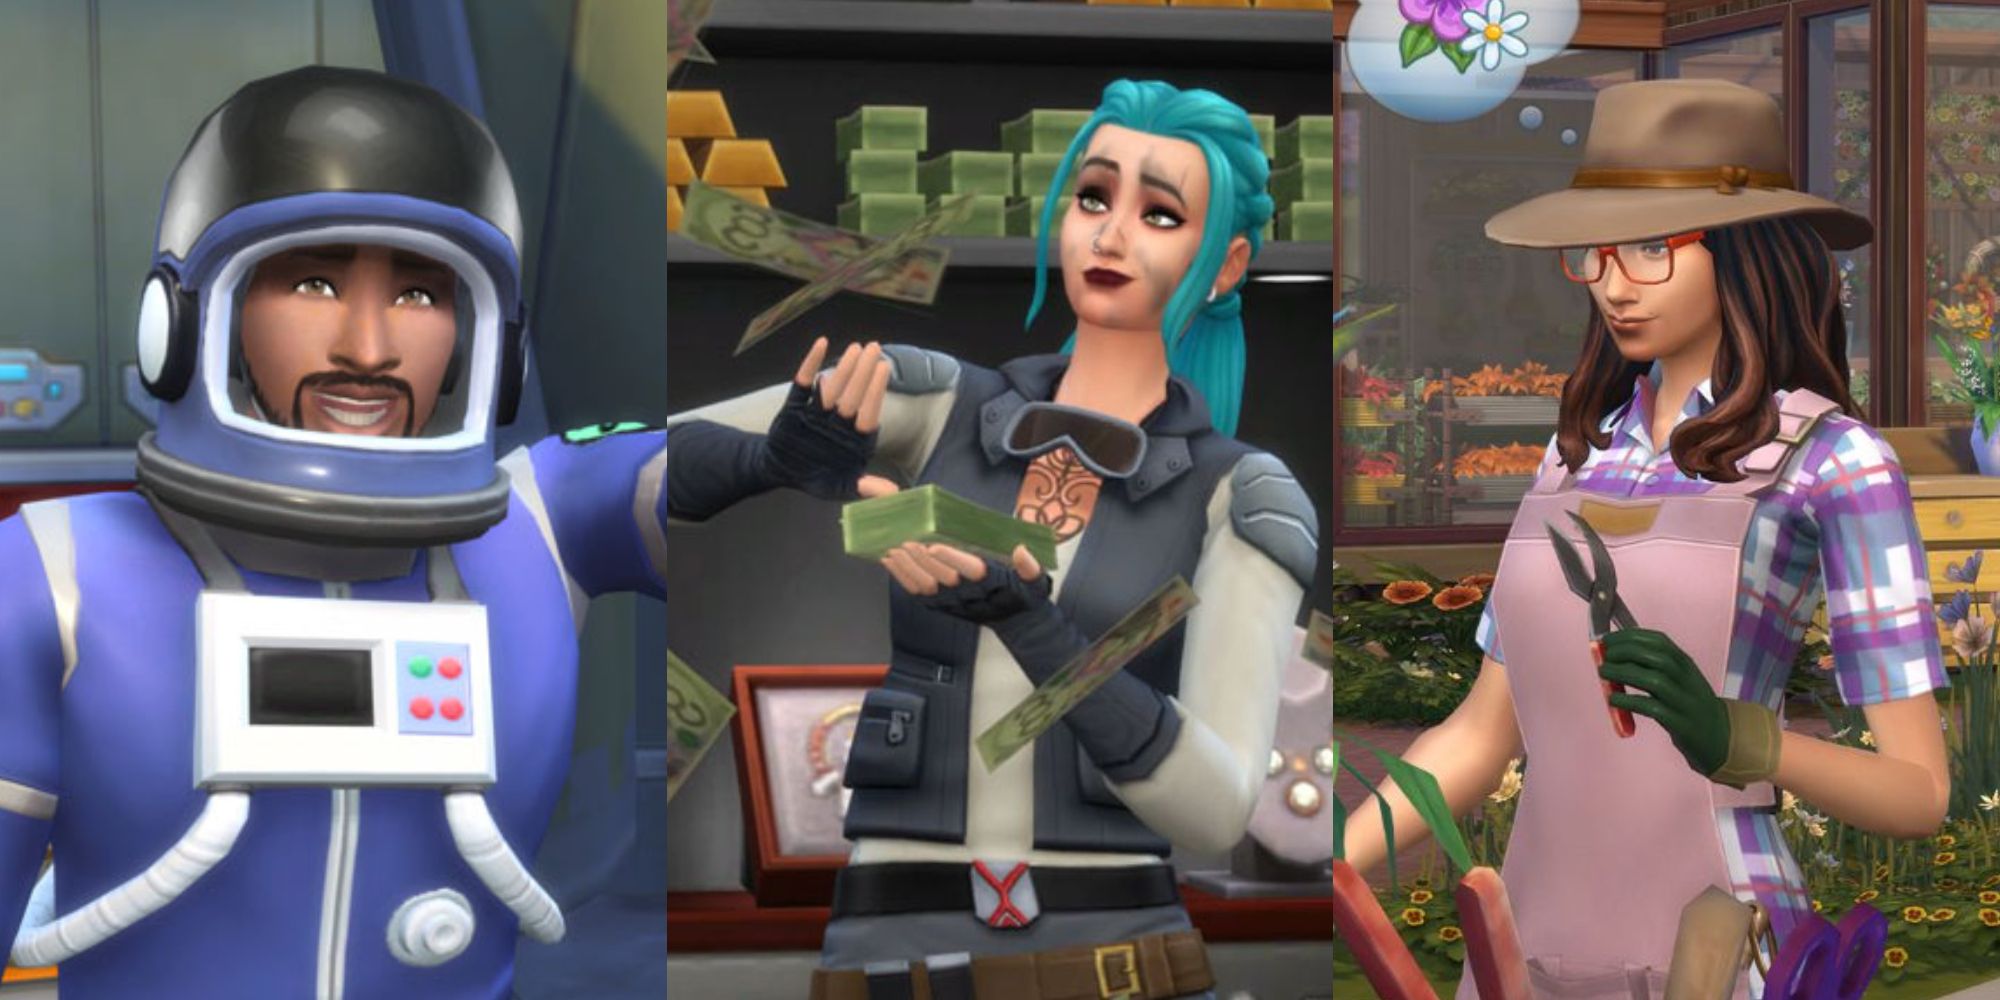 An astronaut, an interstellar smuggler, and a gardener in The Sims 4